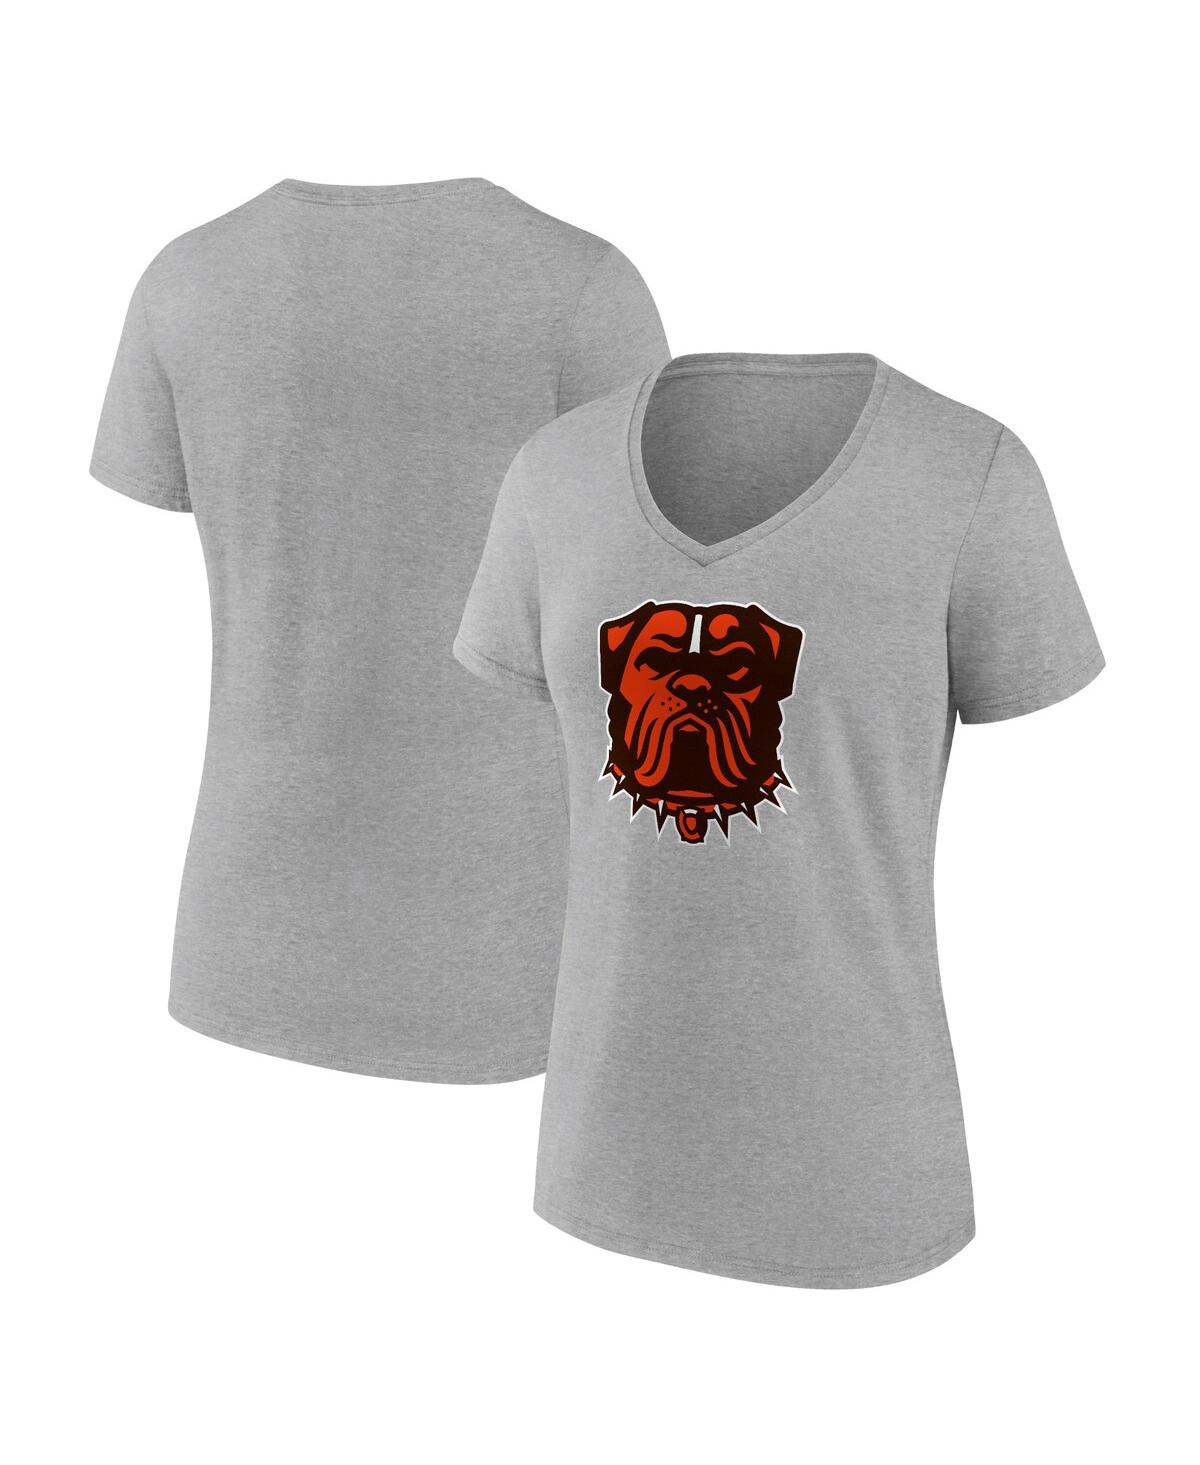 Fanatics Women's  Heather Charcoal Cleveland Browns Dawg Logo V-neck T-shirt